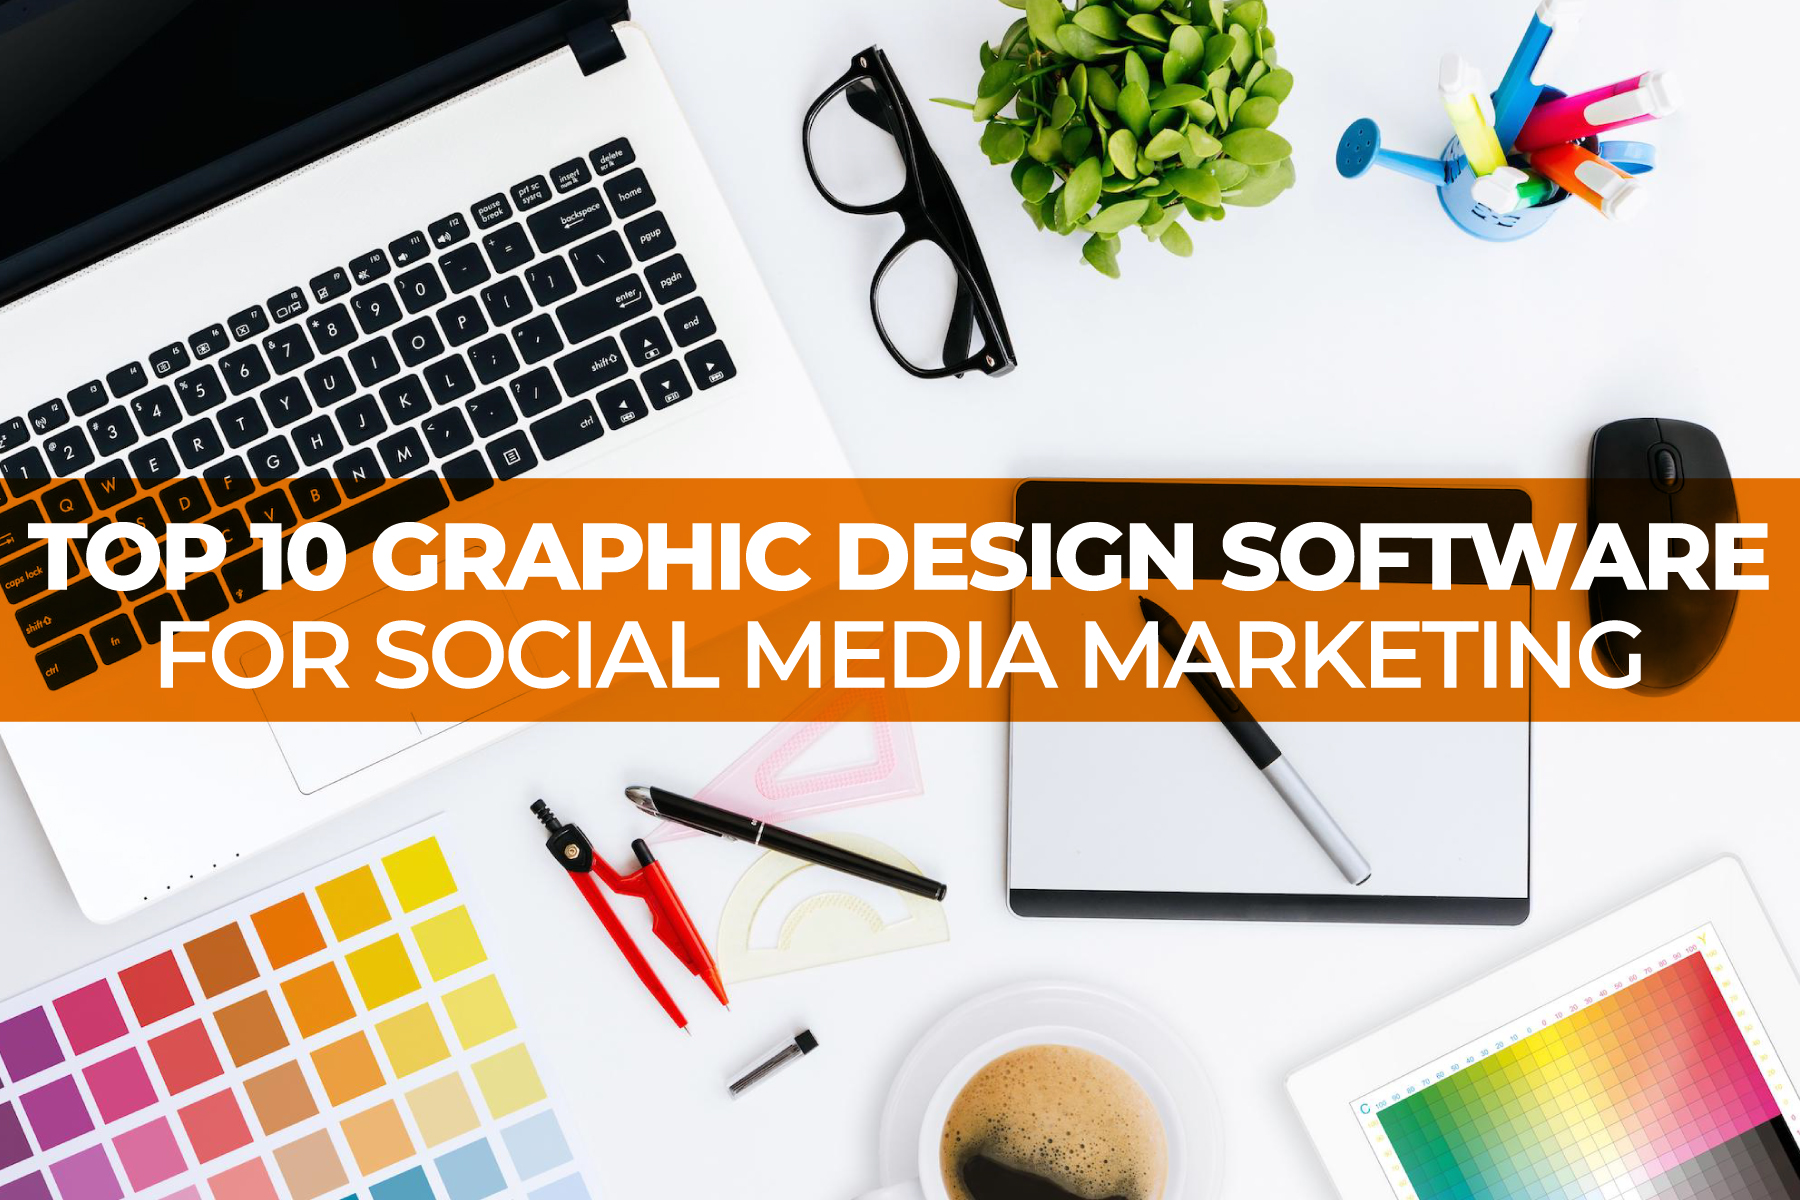 Top 10 Graphic Design Software for Social Media Marketing